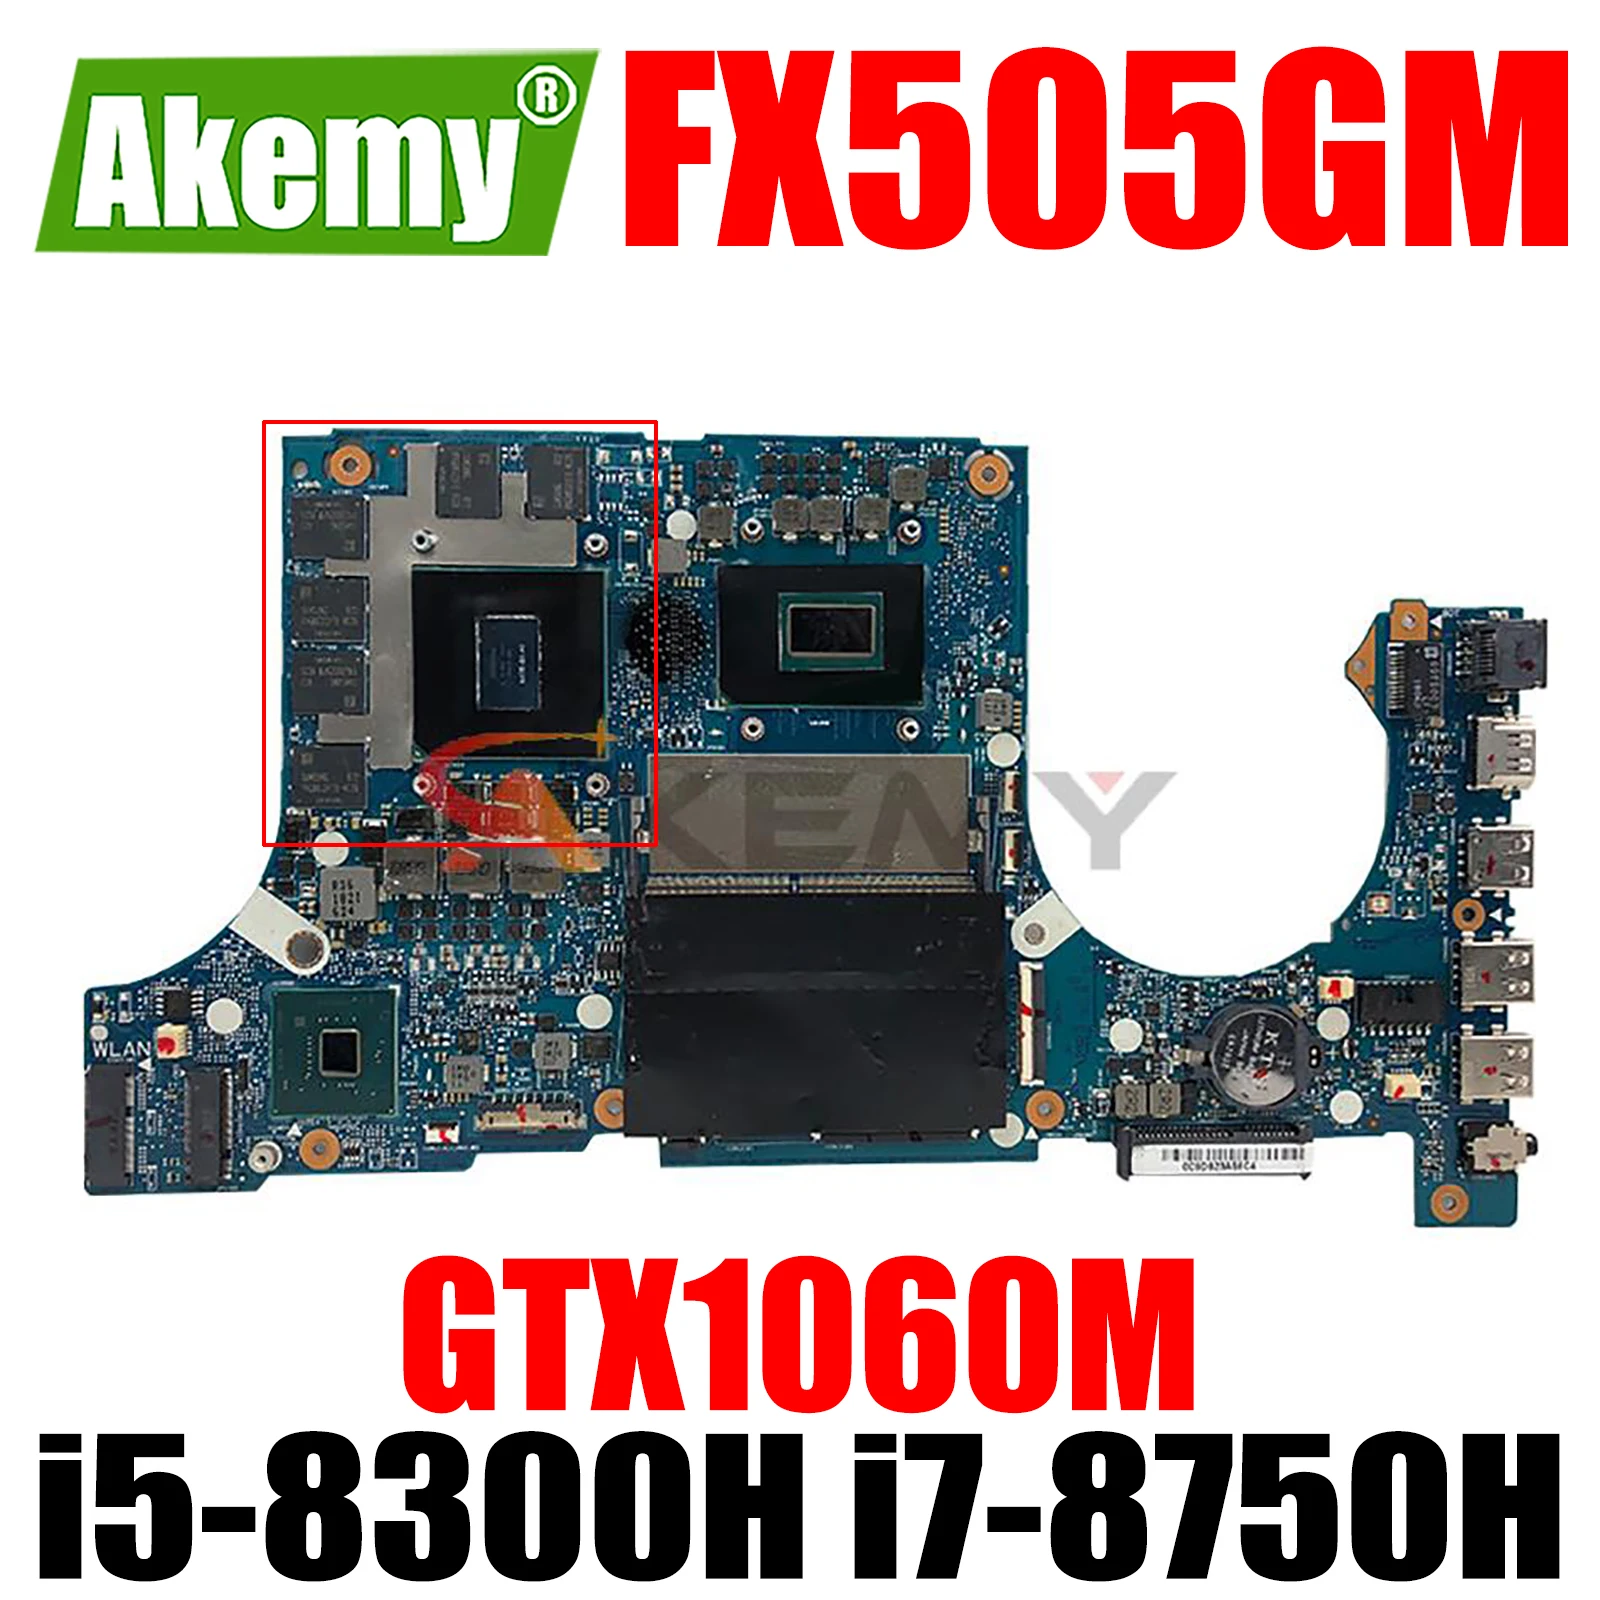 

FX505GM Motherboard w/ i5-8300H i7-8750H CPU GTX1060M GPU for ASUS FX505GM FX505G FX705GM Mainboard Original Motherboard